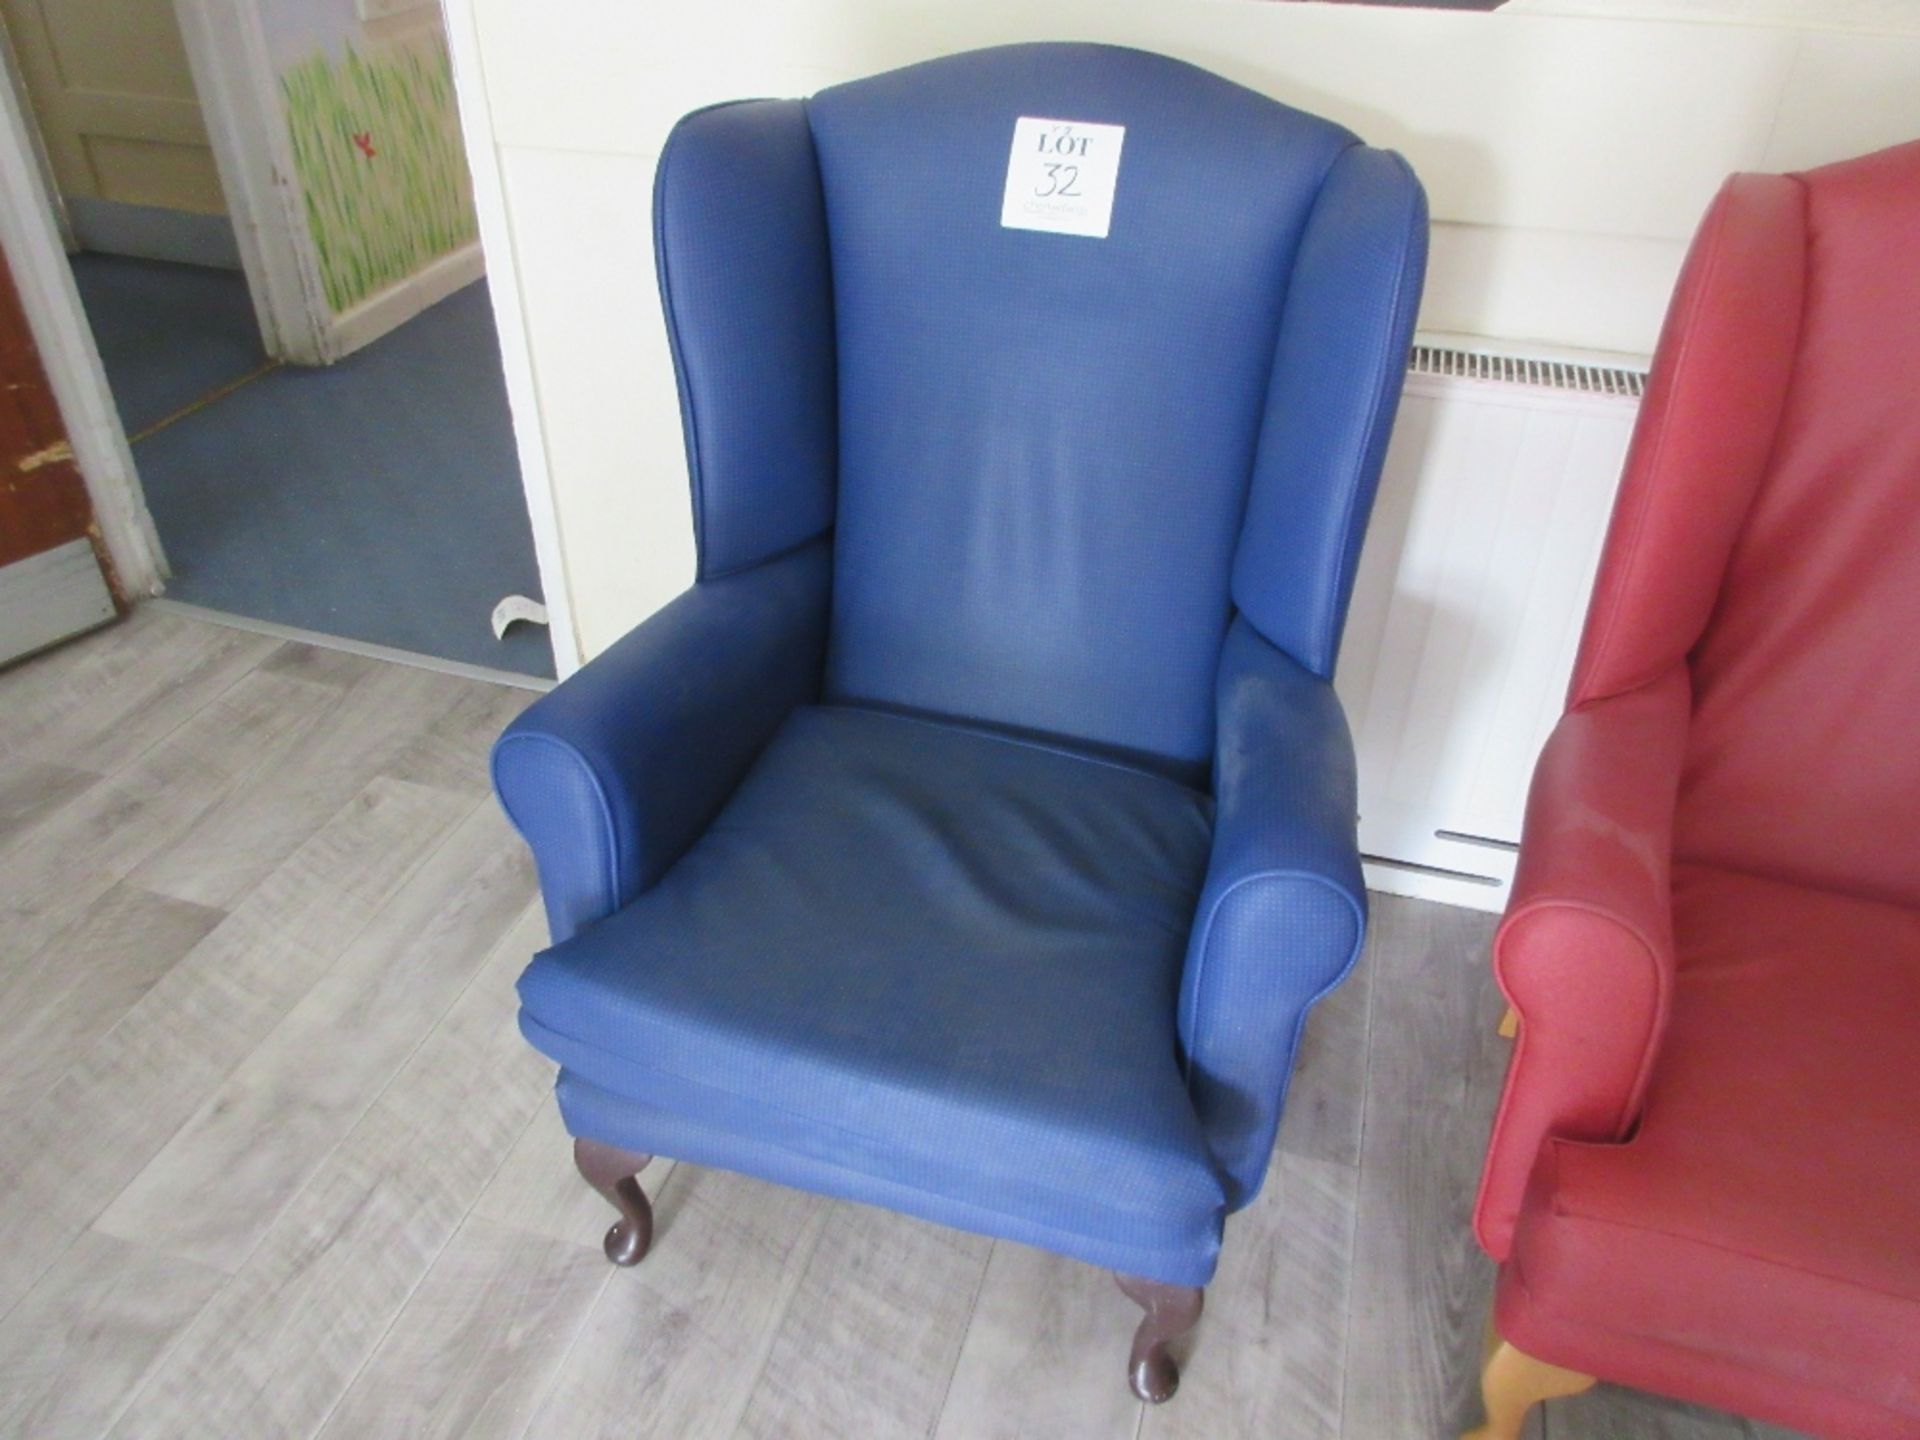 3 - Blue vinyl based armchairs